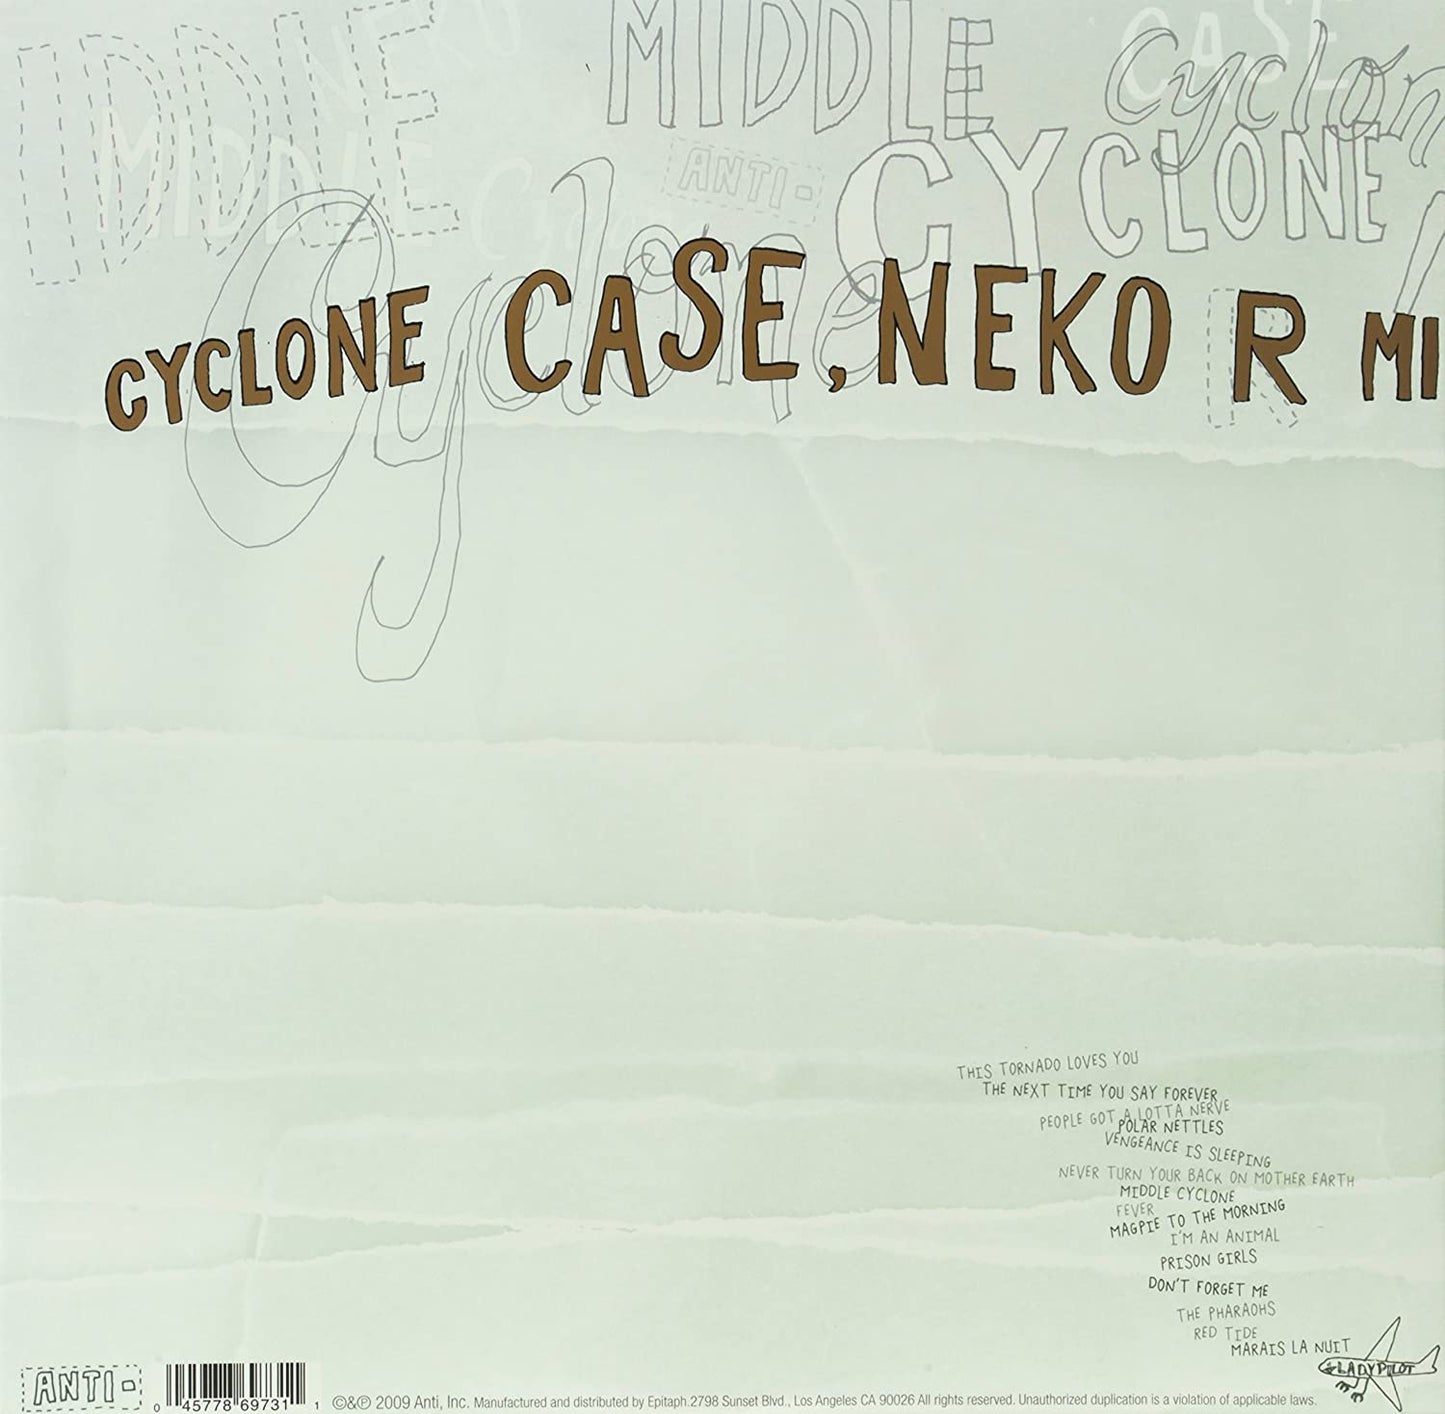 Case, Neko/Middle Cyclone [LP]